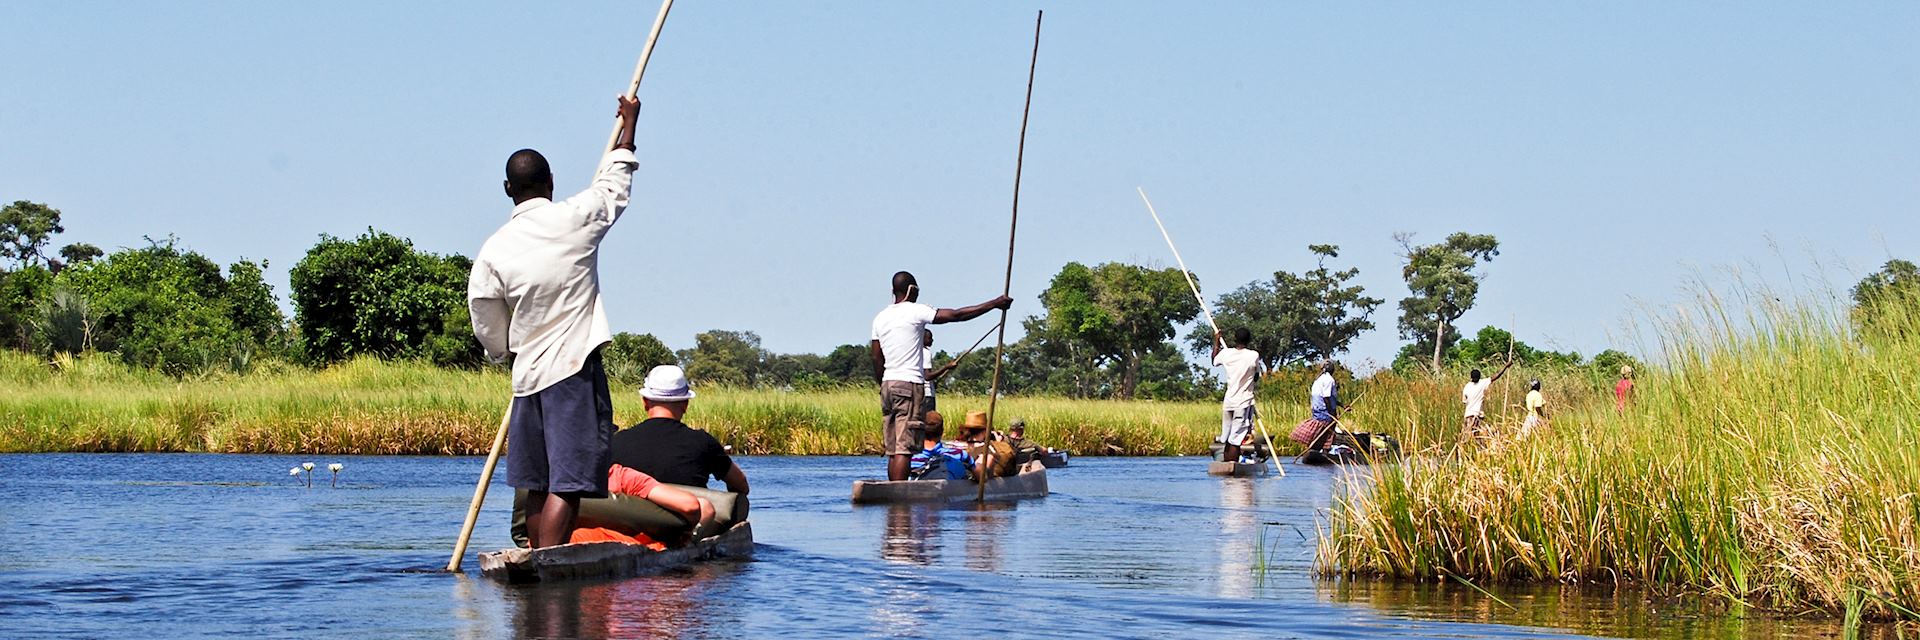 Okavango Delta mokoro boat trip